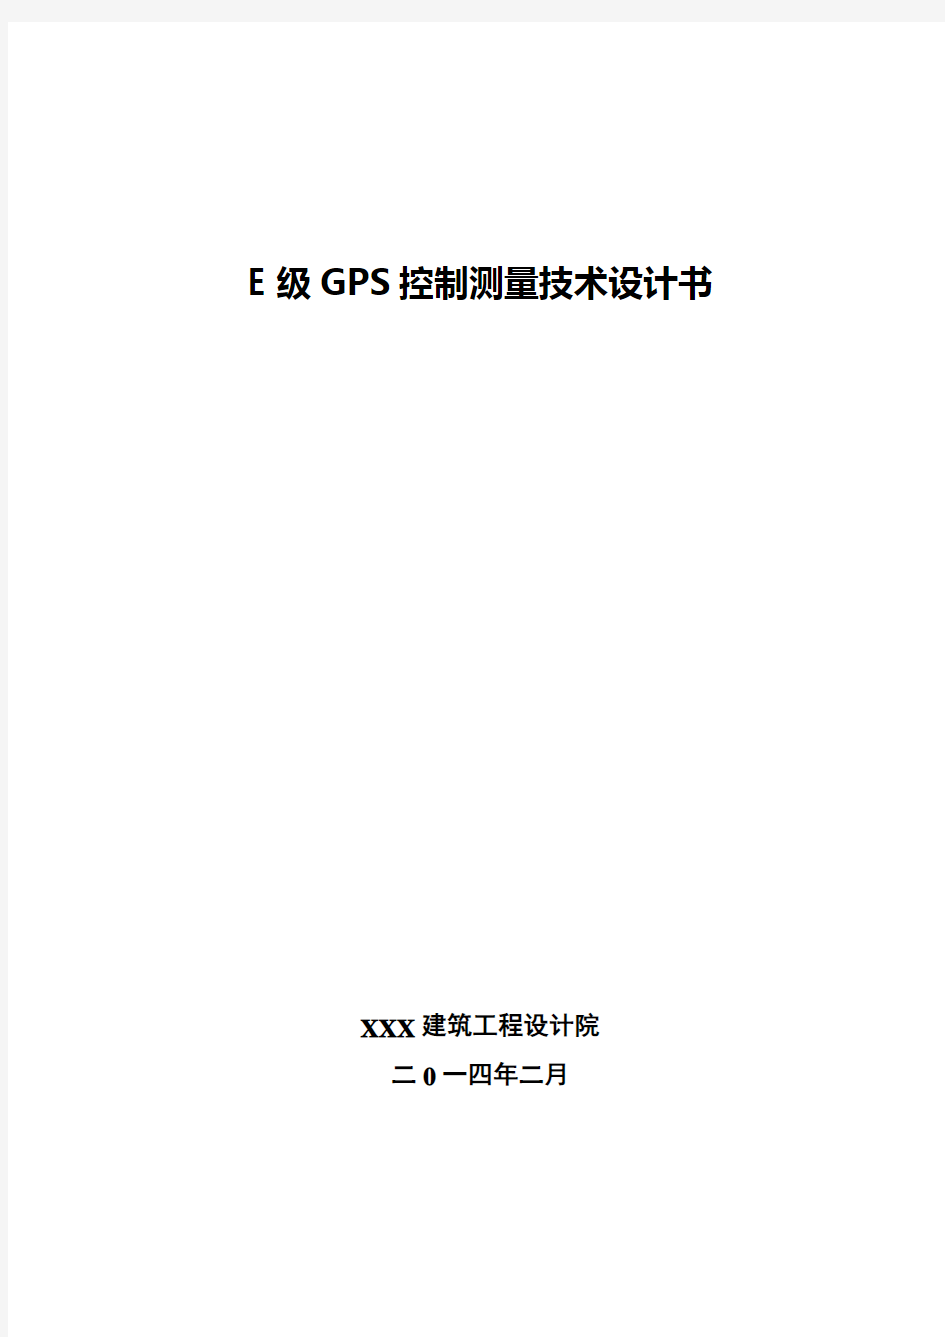 E级GPS控制测量技术设计书(DOC)